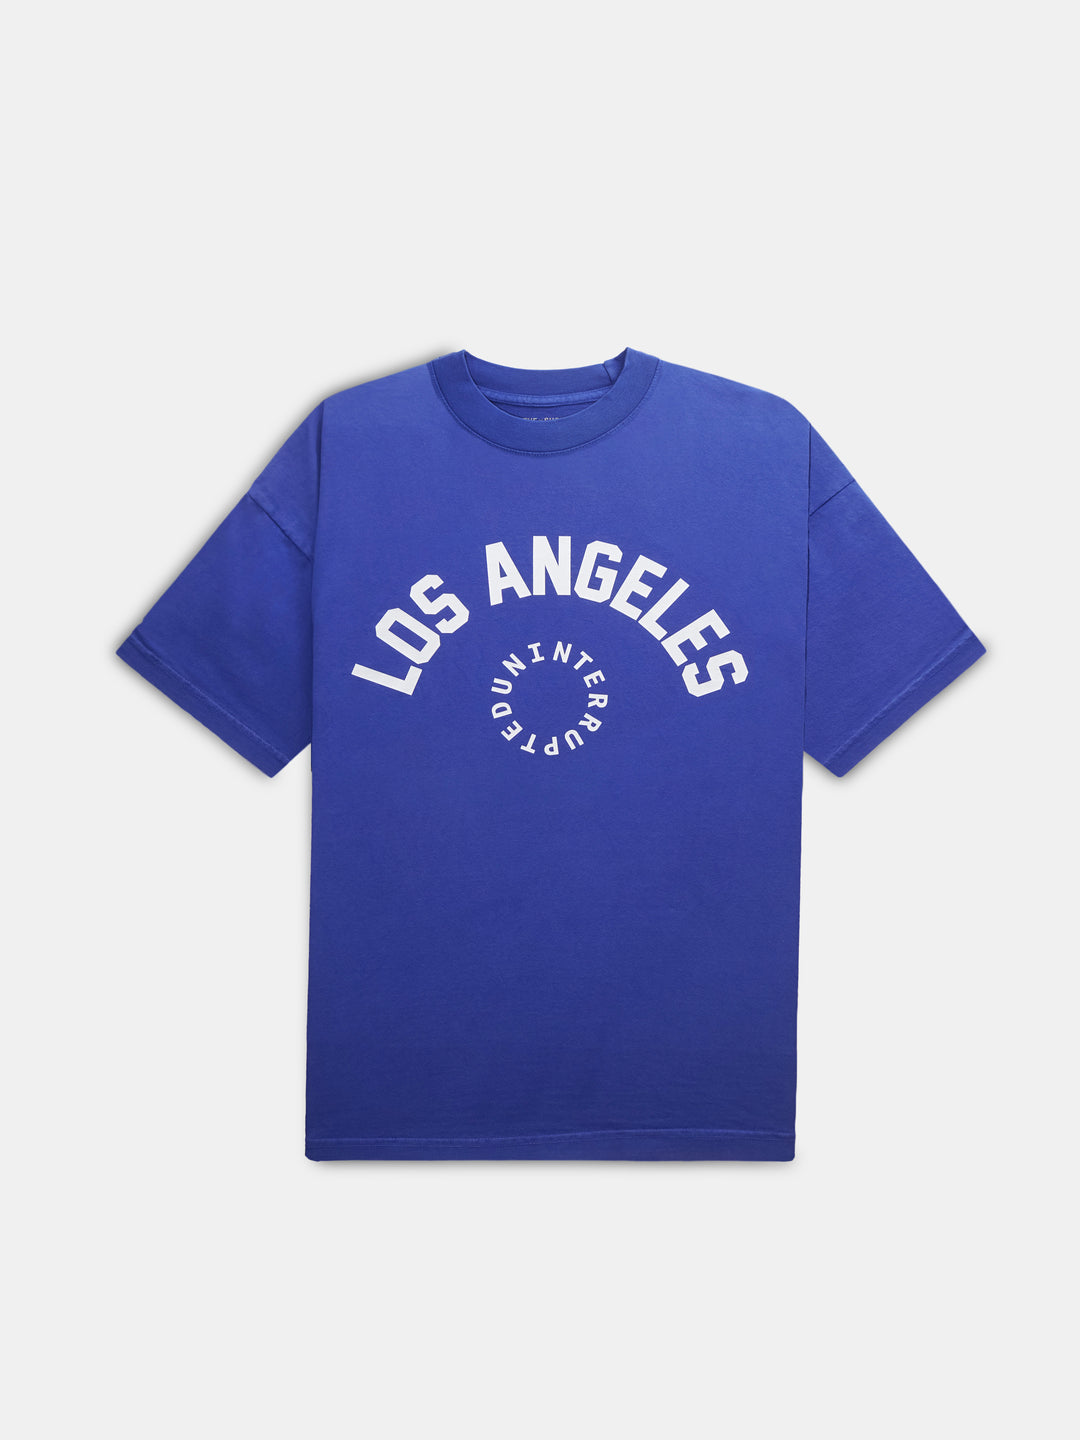 Los Angeles Circle Logo Tee Blue front